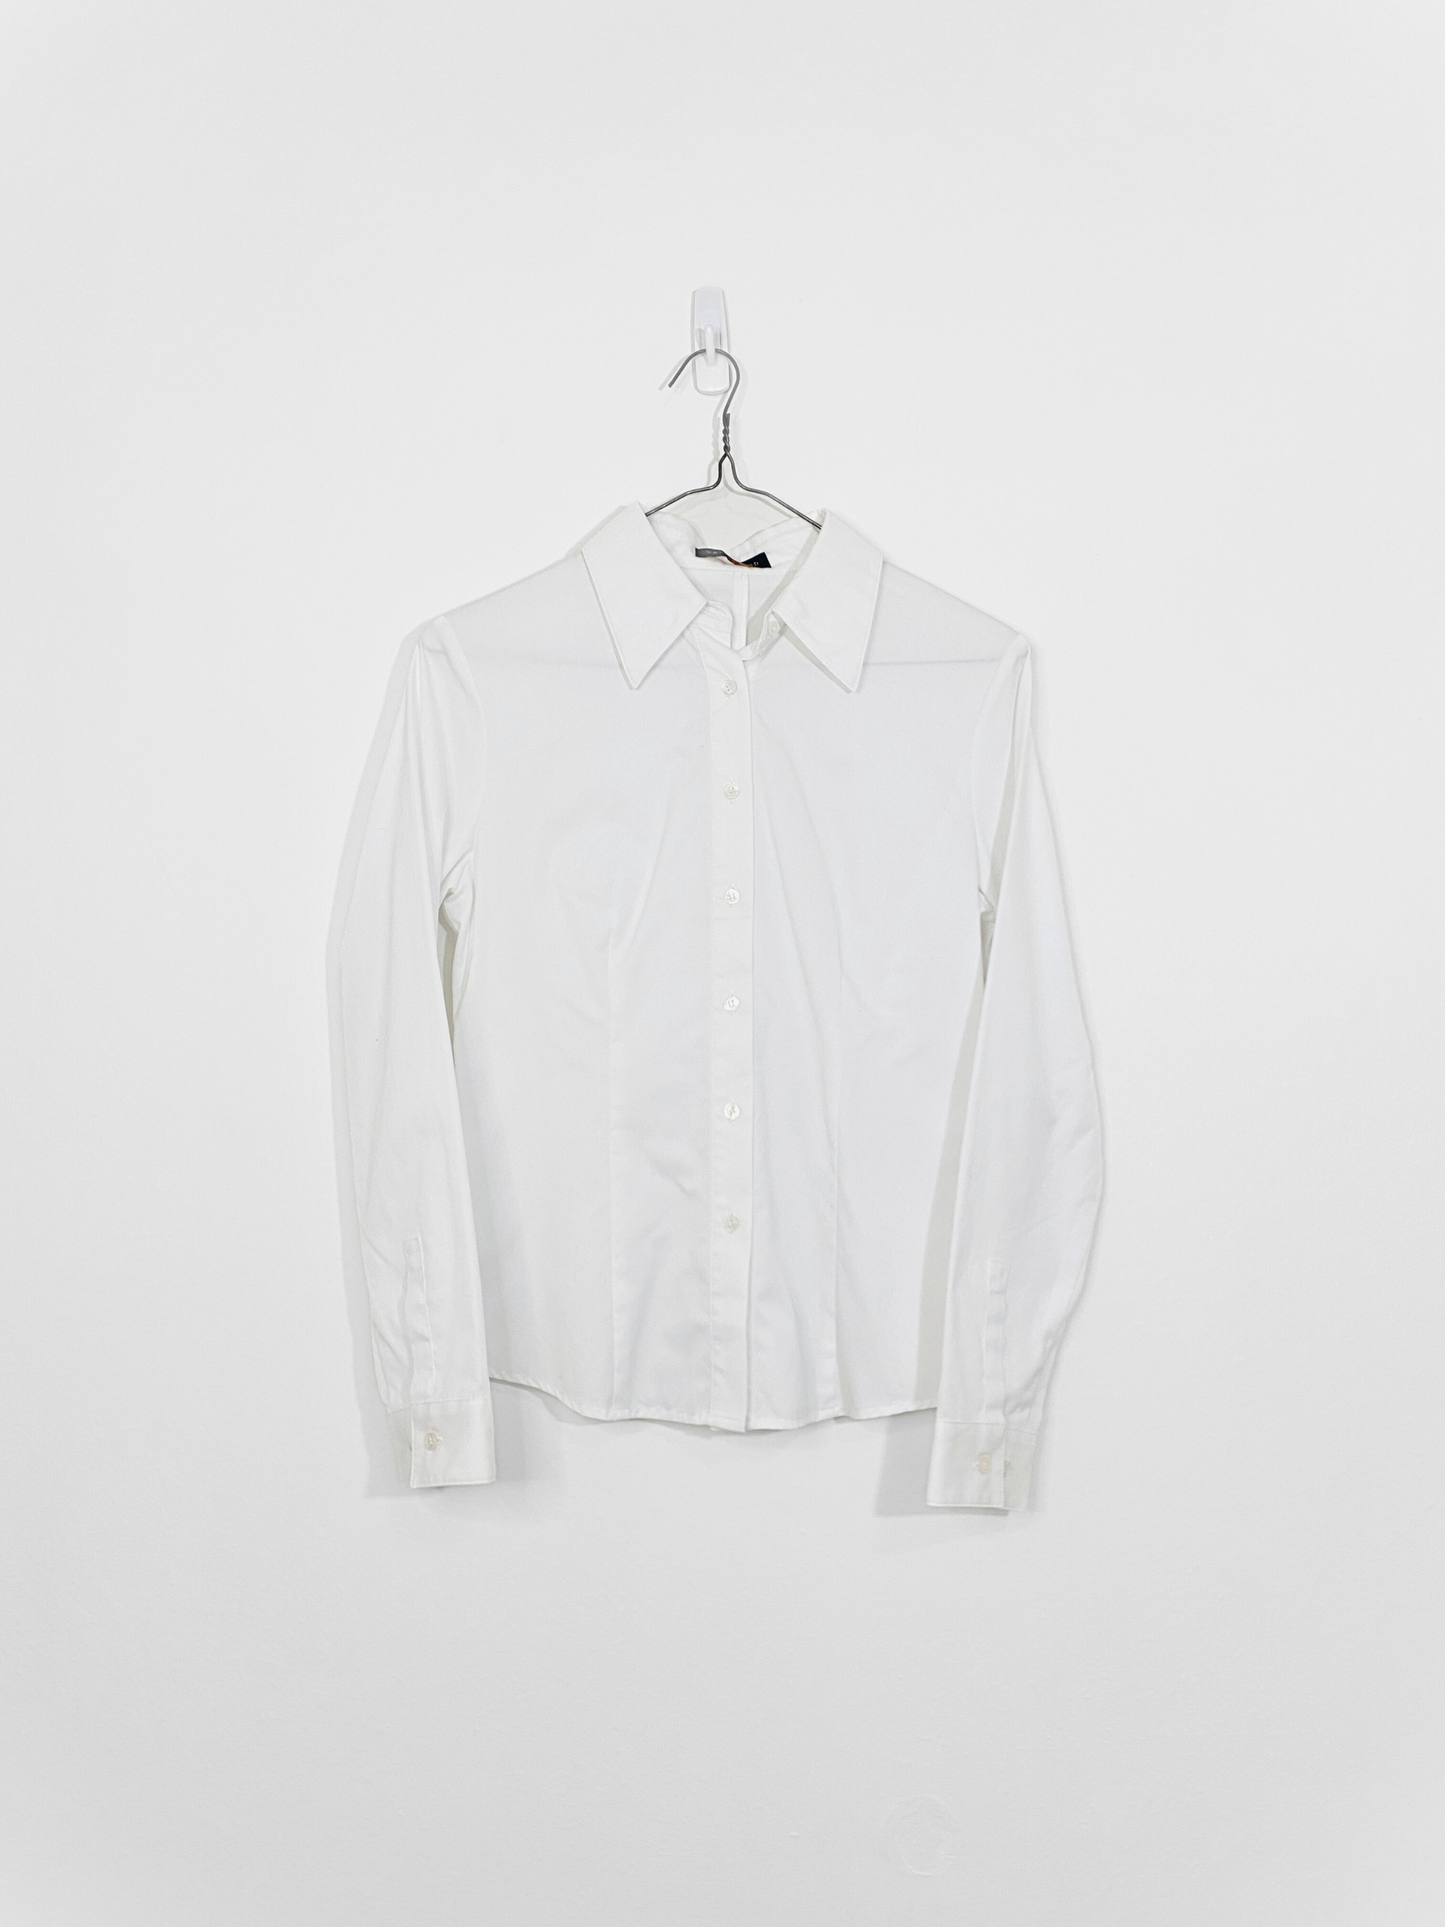 White Button-Down Shirt (Small)